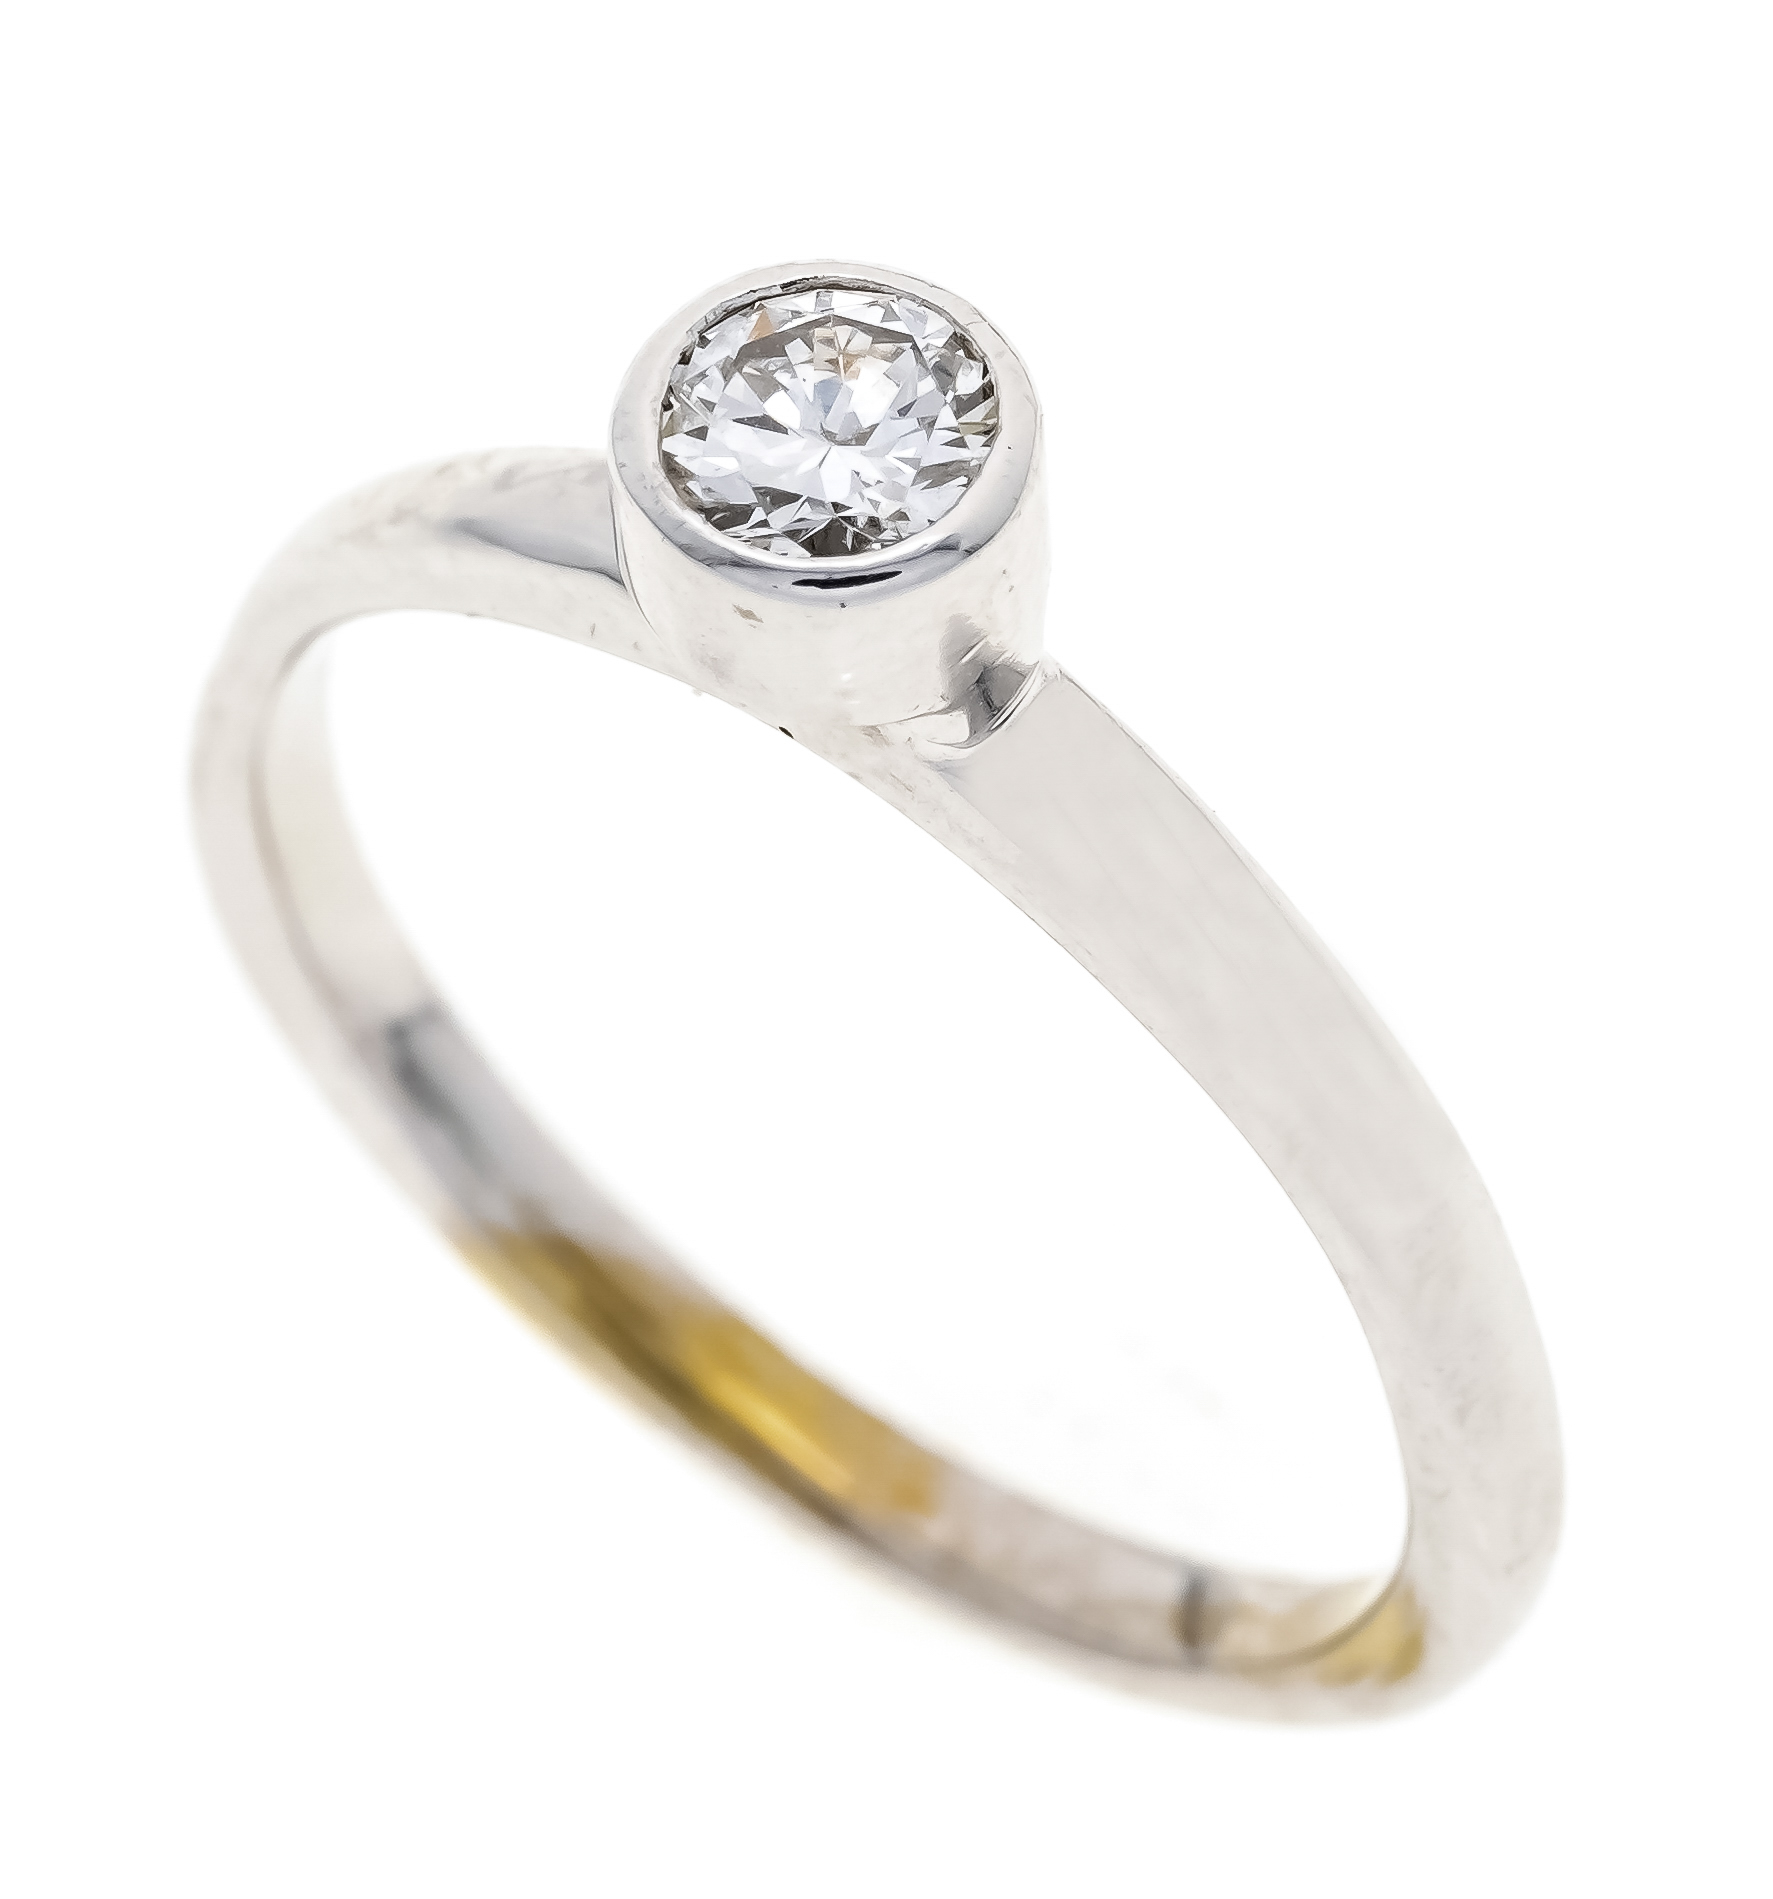 Diamond ring WG 585/000 with one brilliant-cut diamond 0.25 ct W/VS-SI, RG 51, 2.4 g